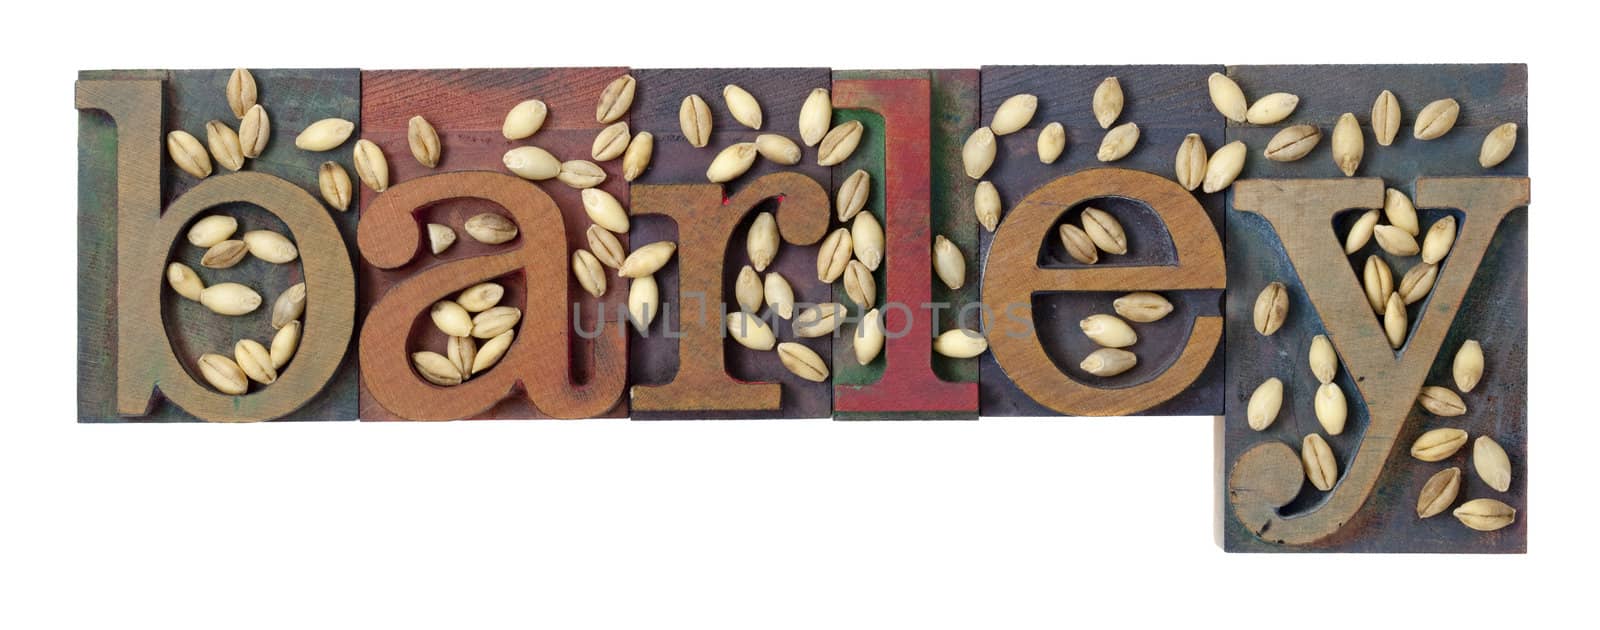 barley word and grain by PixelsAway